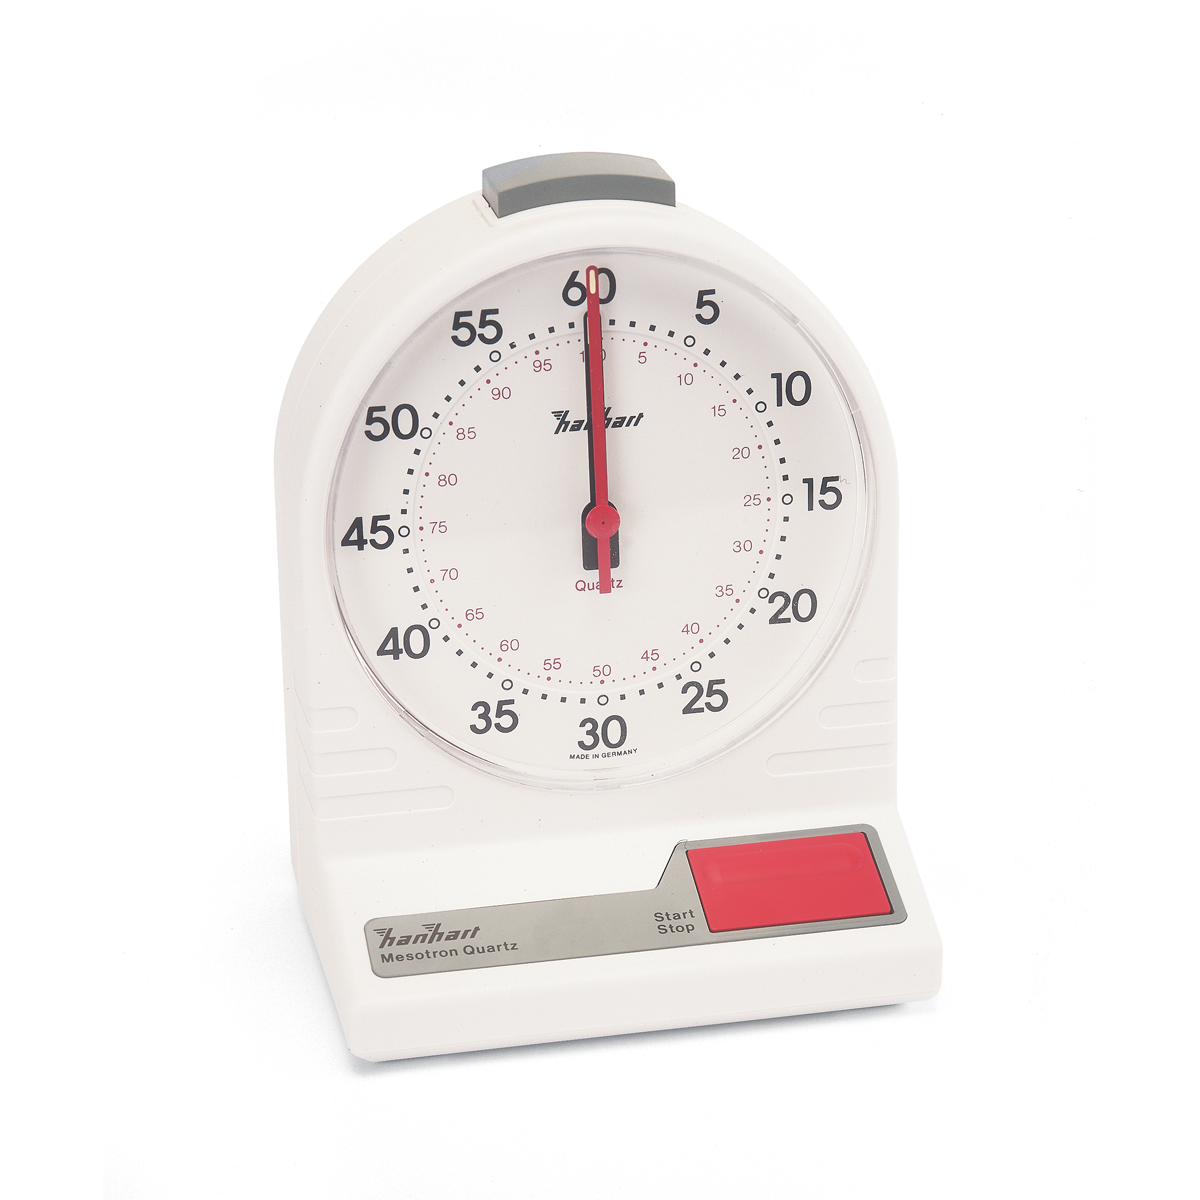 Hanhart® Table Stopwatch Prisma 200